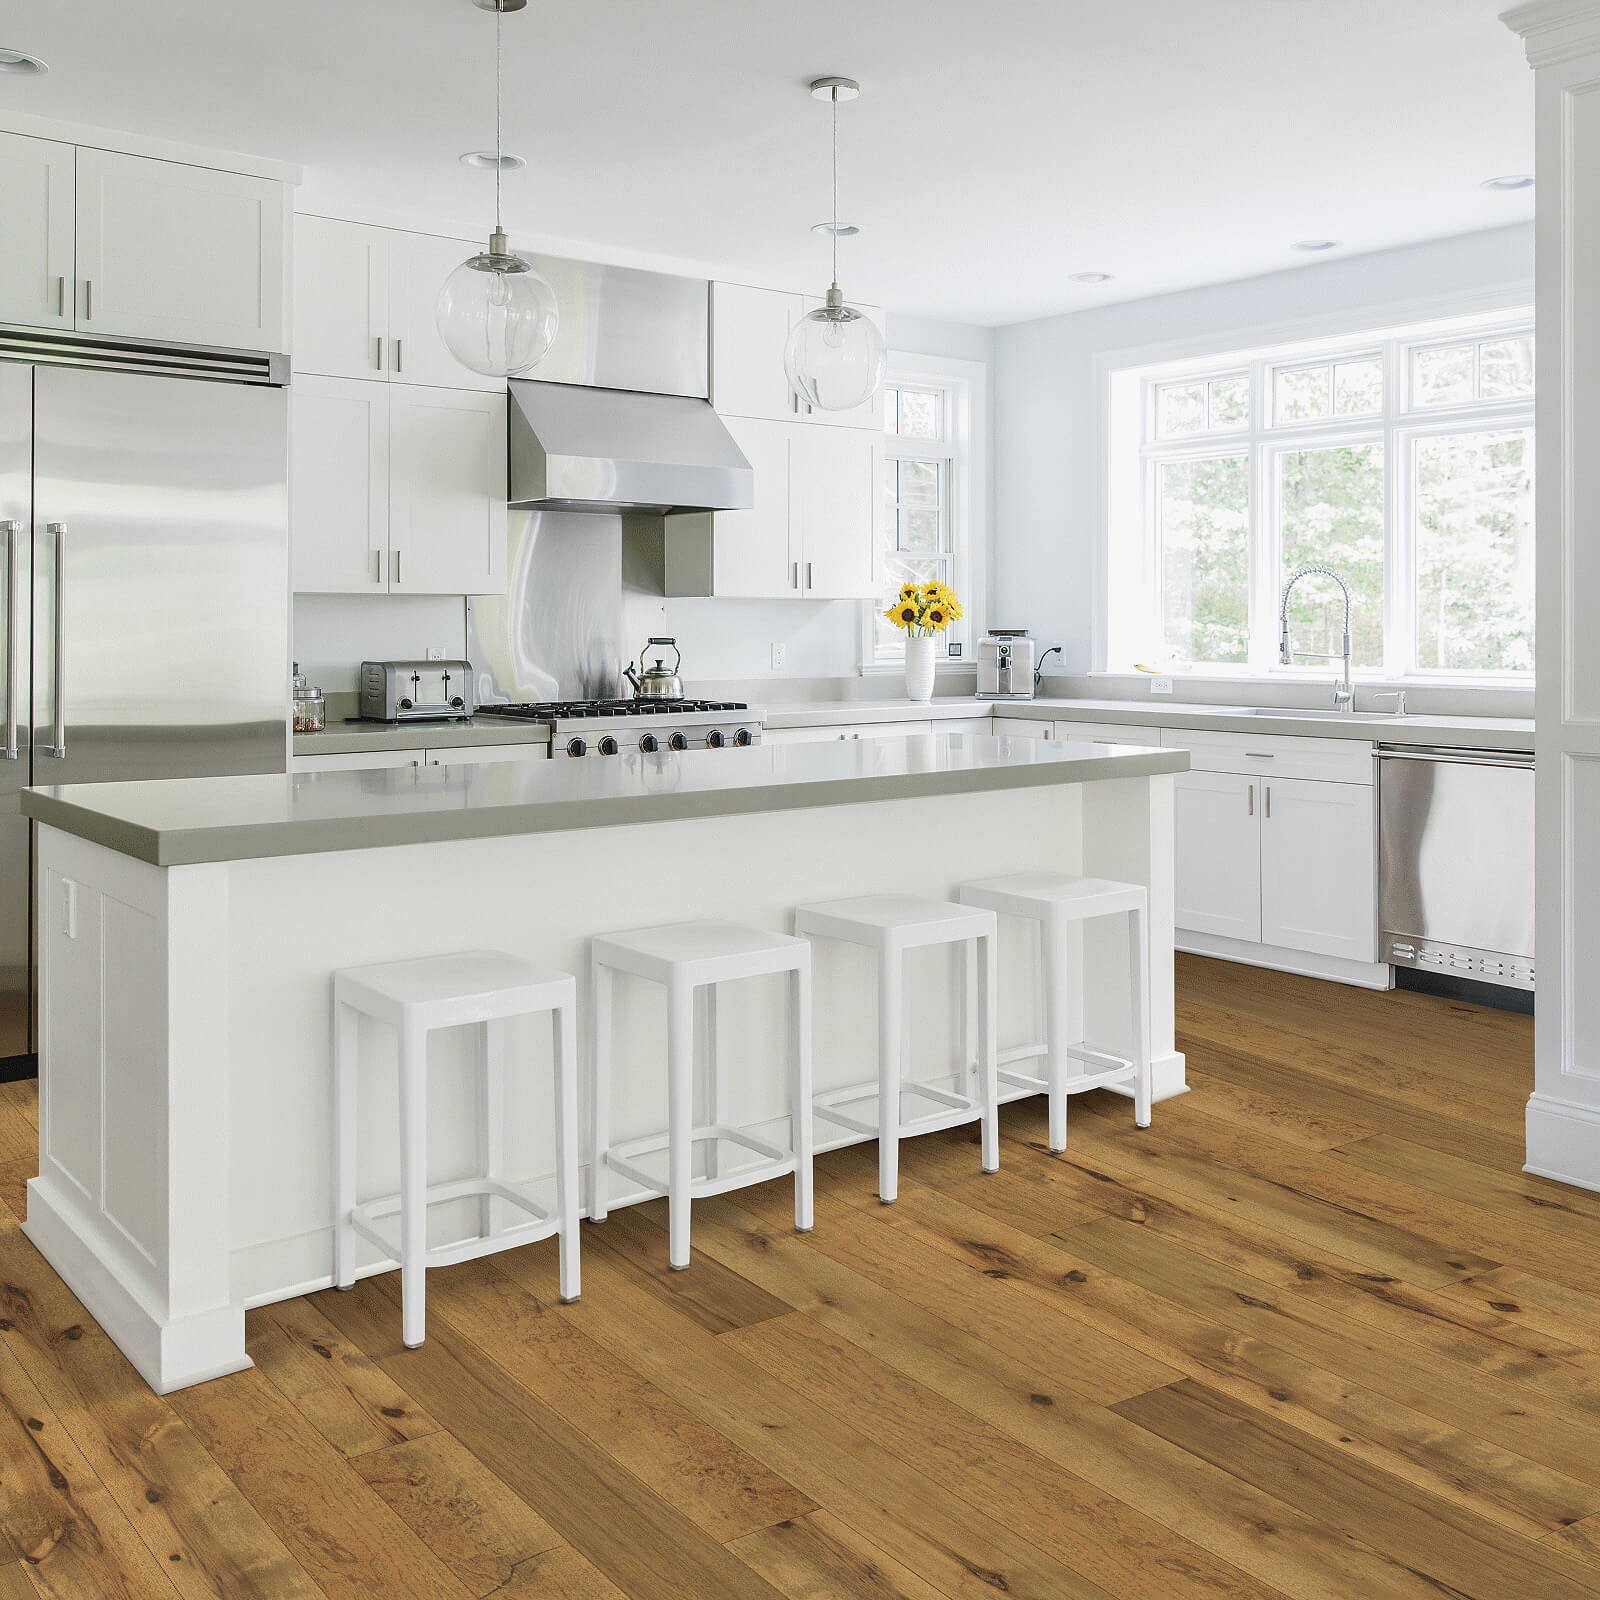 Kitchen white interior | Hauptman Floor Covering Co Inc